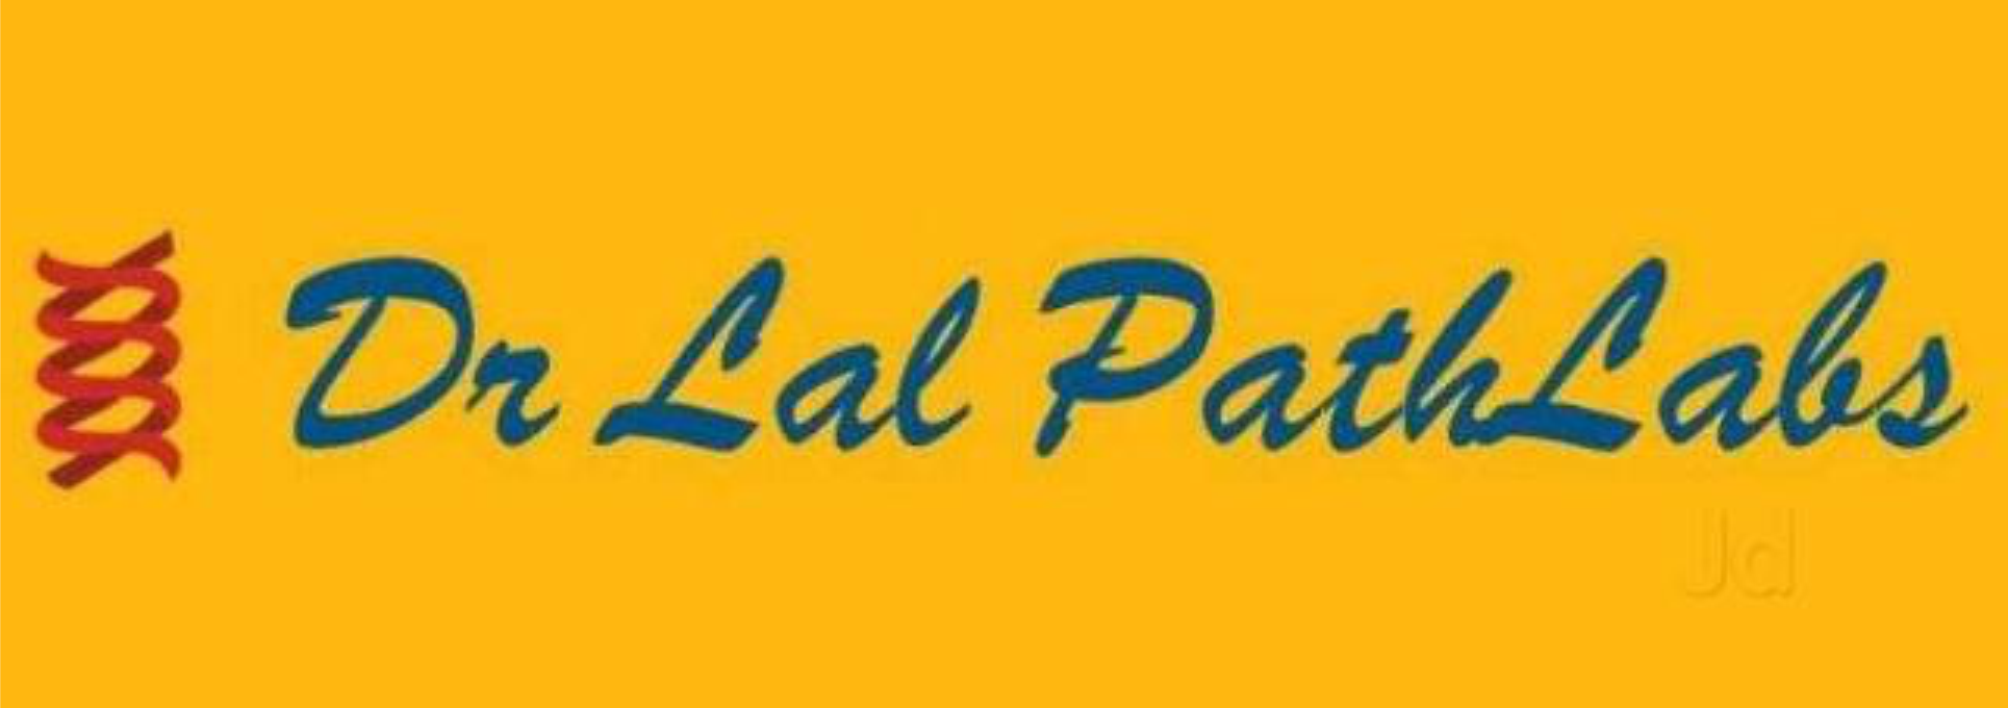 Report lal path lab